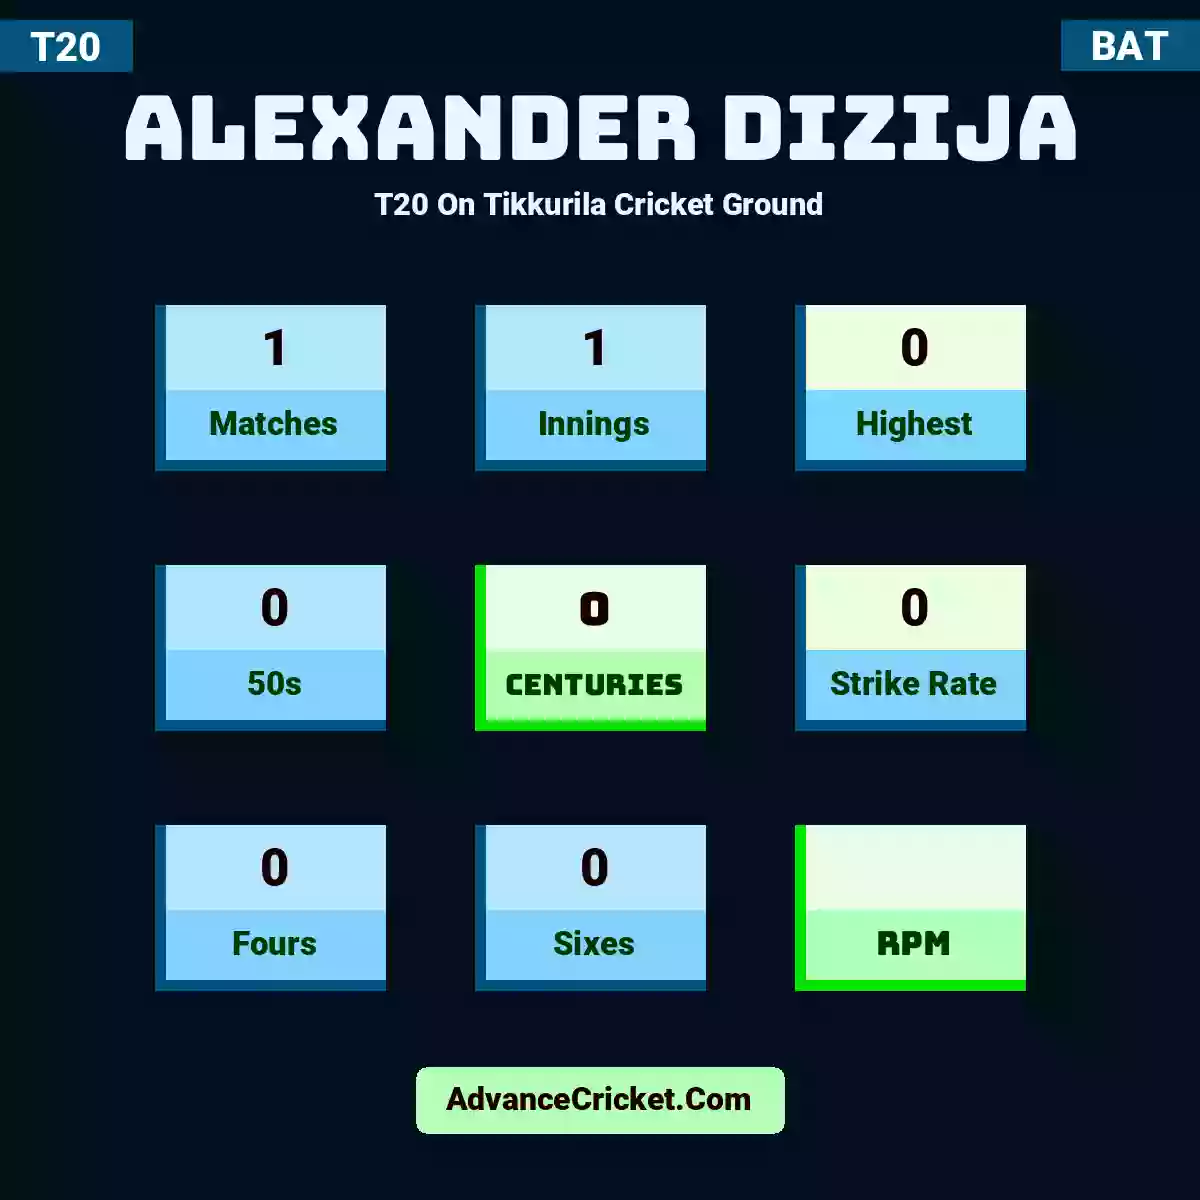 Alexander Dizija T20  On Tikkurila Cricket Ground, Alexander Dizija played 1 matches, scored 0 runs as highest, 0 half-centuries, and 0 centuries, with a strike rate of 0. A.Dizija hit 0 fours and 0 sixes.